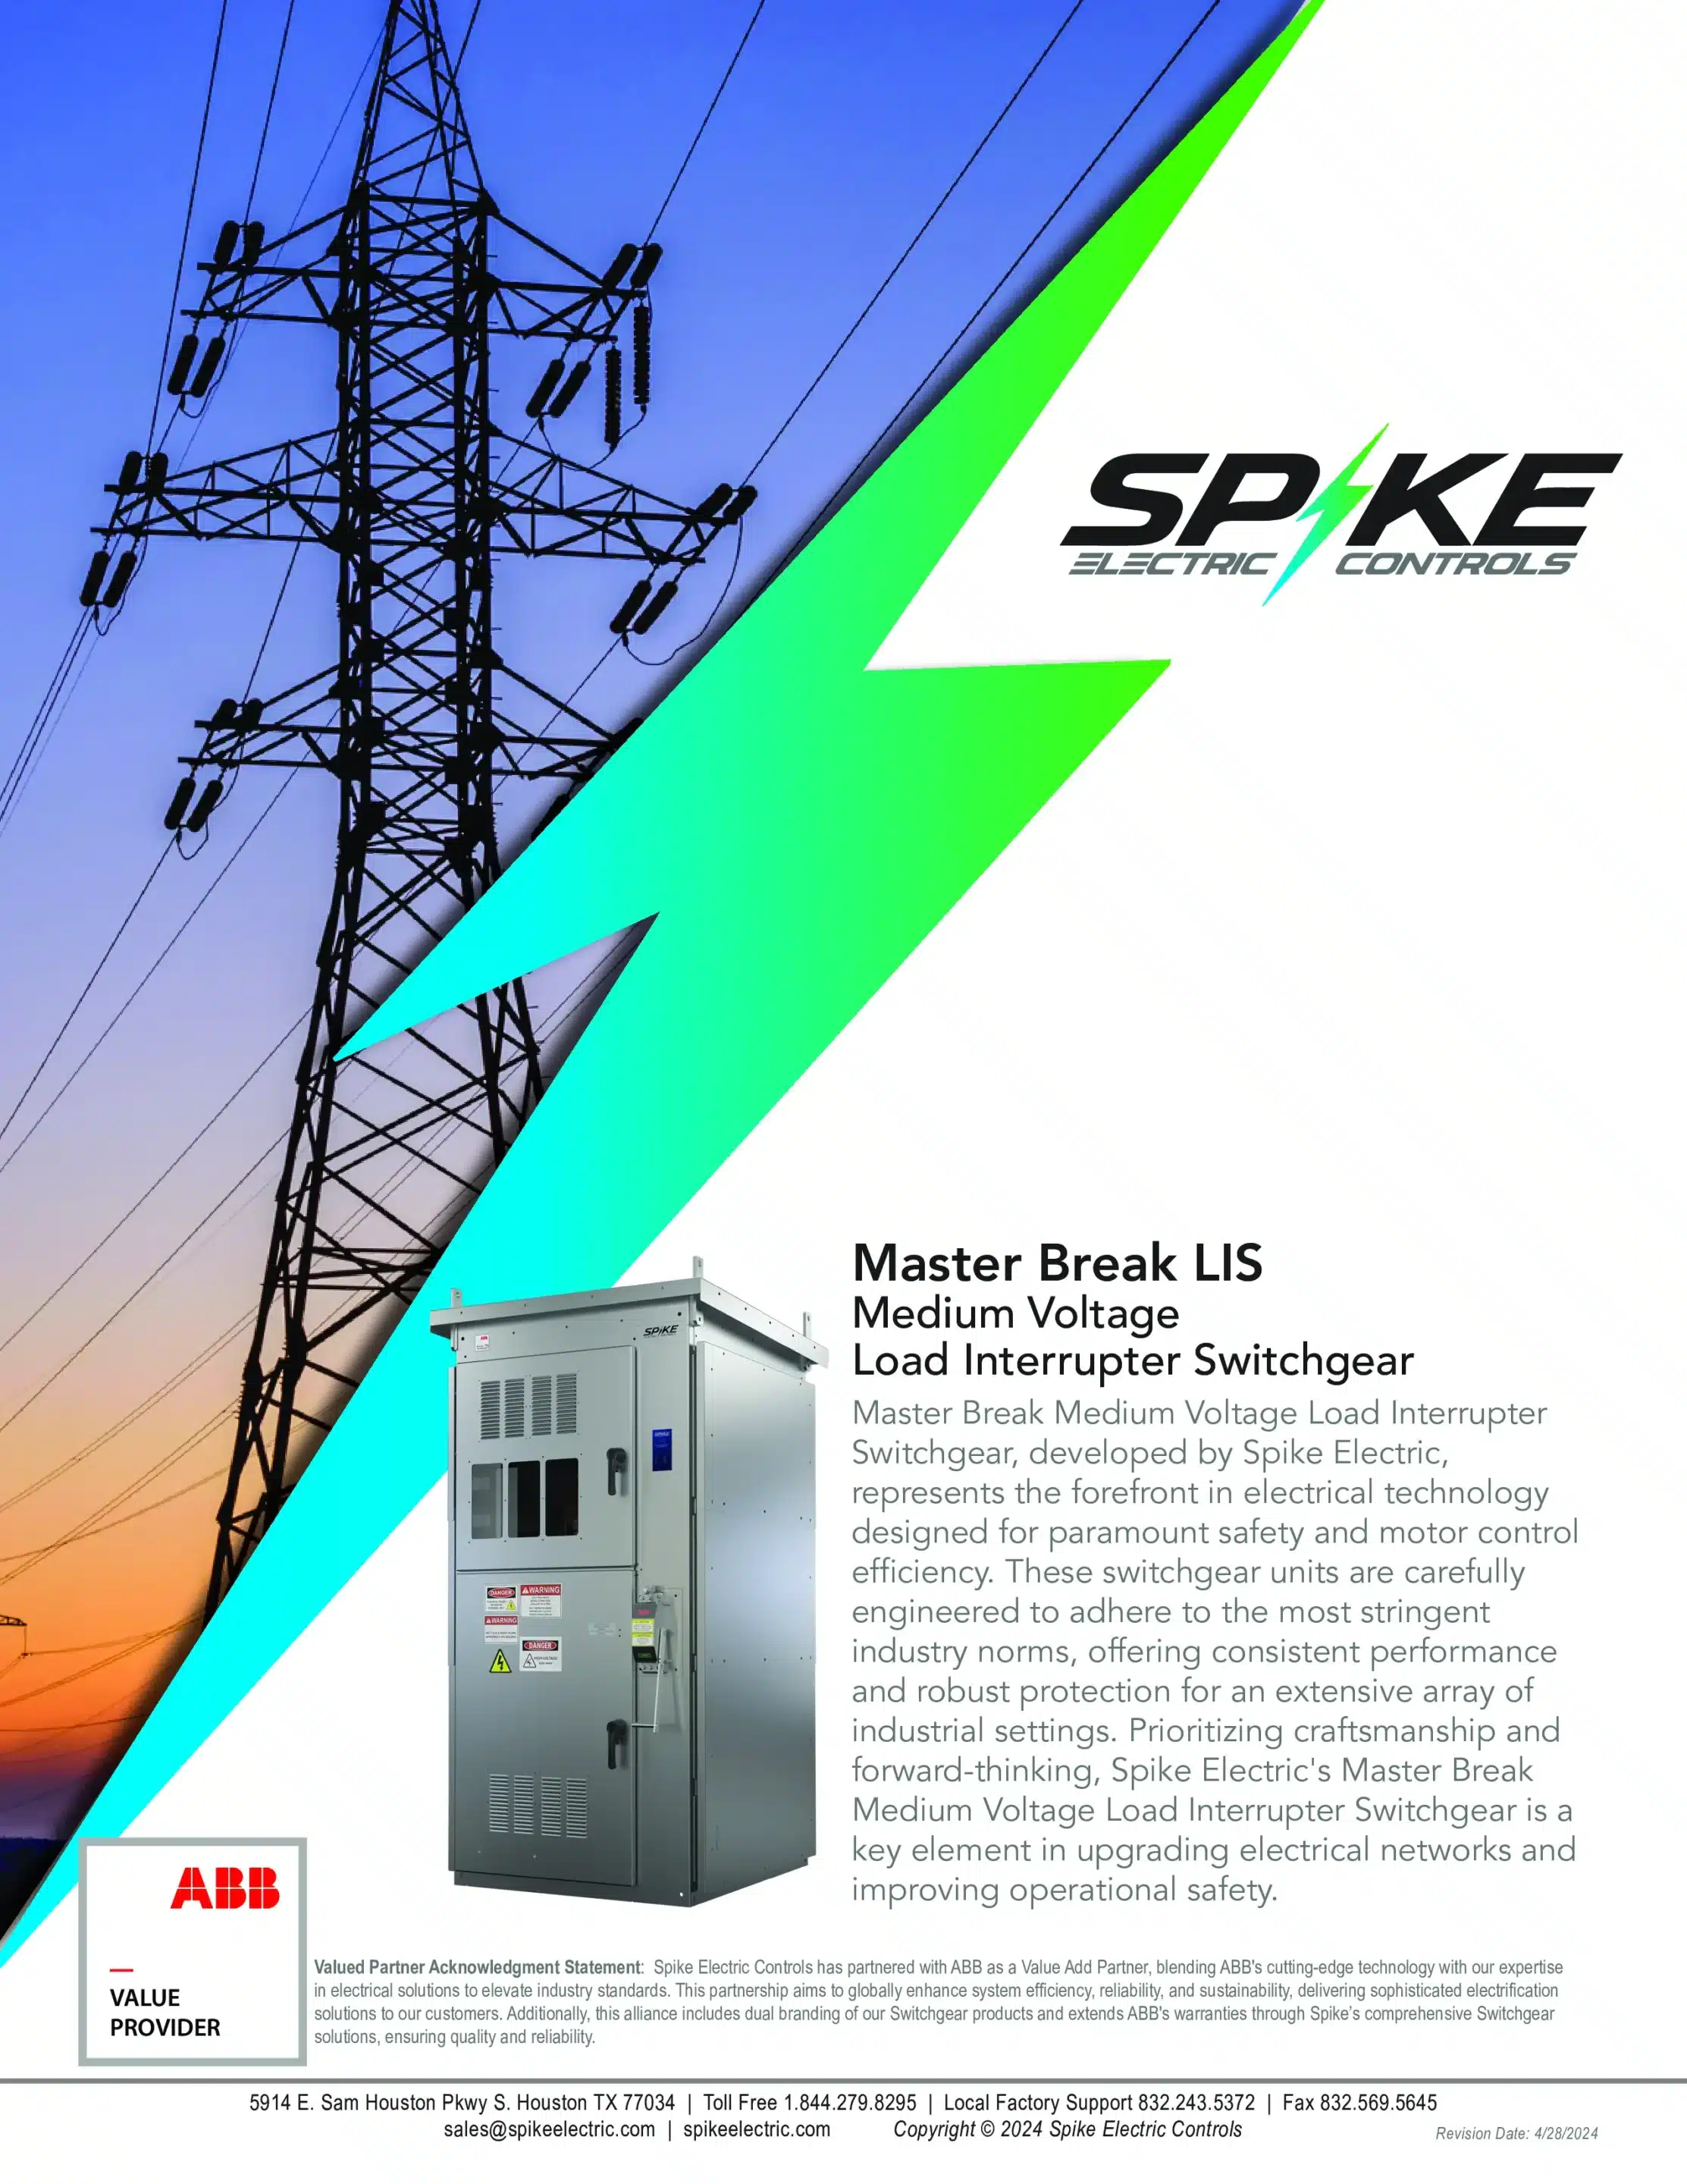 Master Break LIS Med Voltage Interrupter